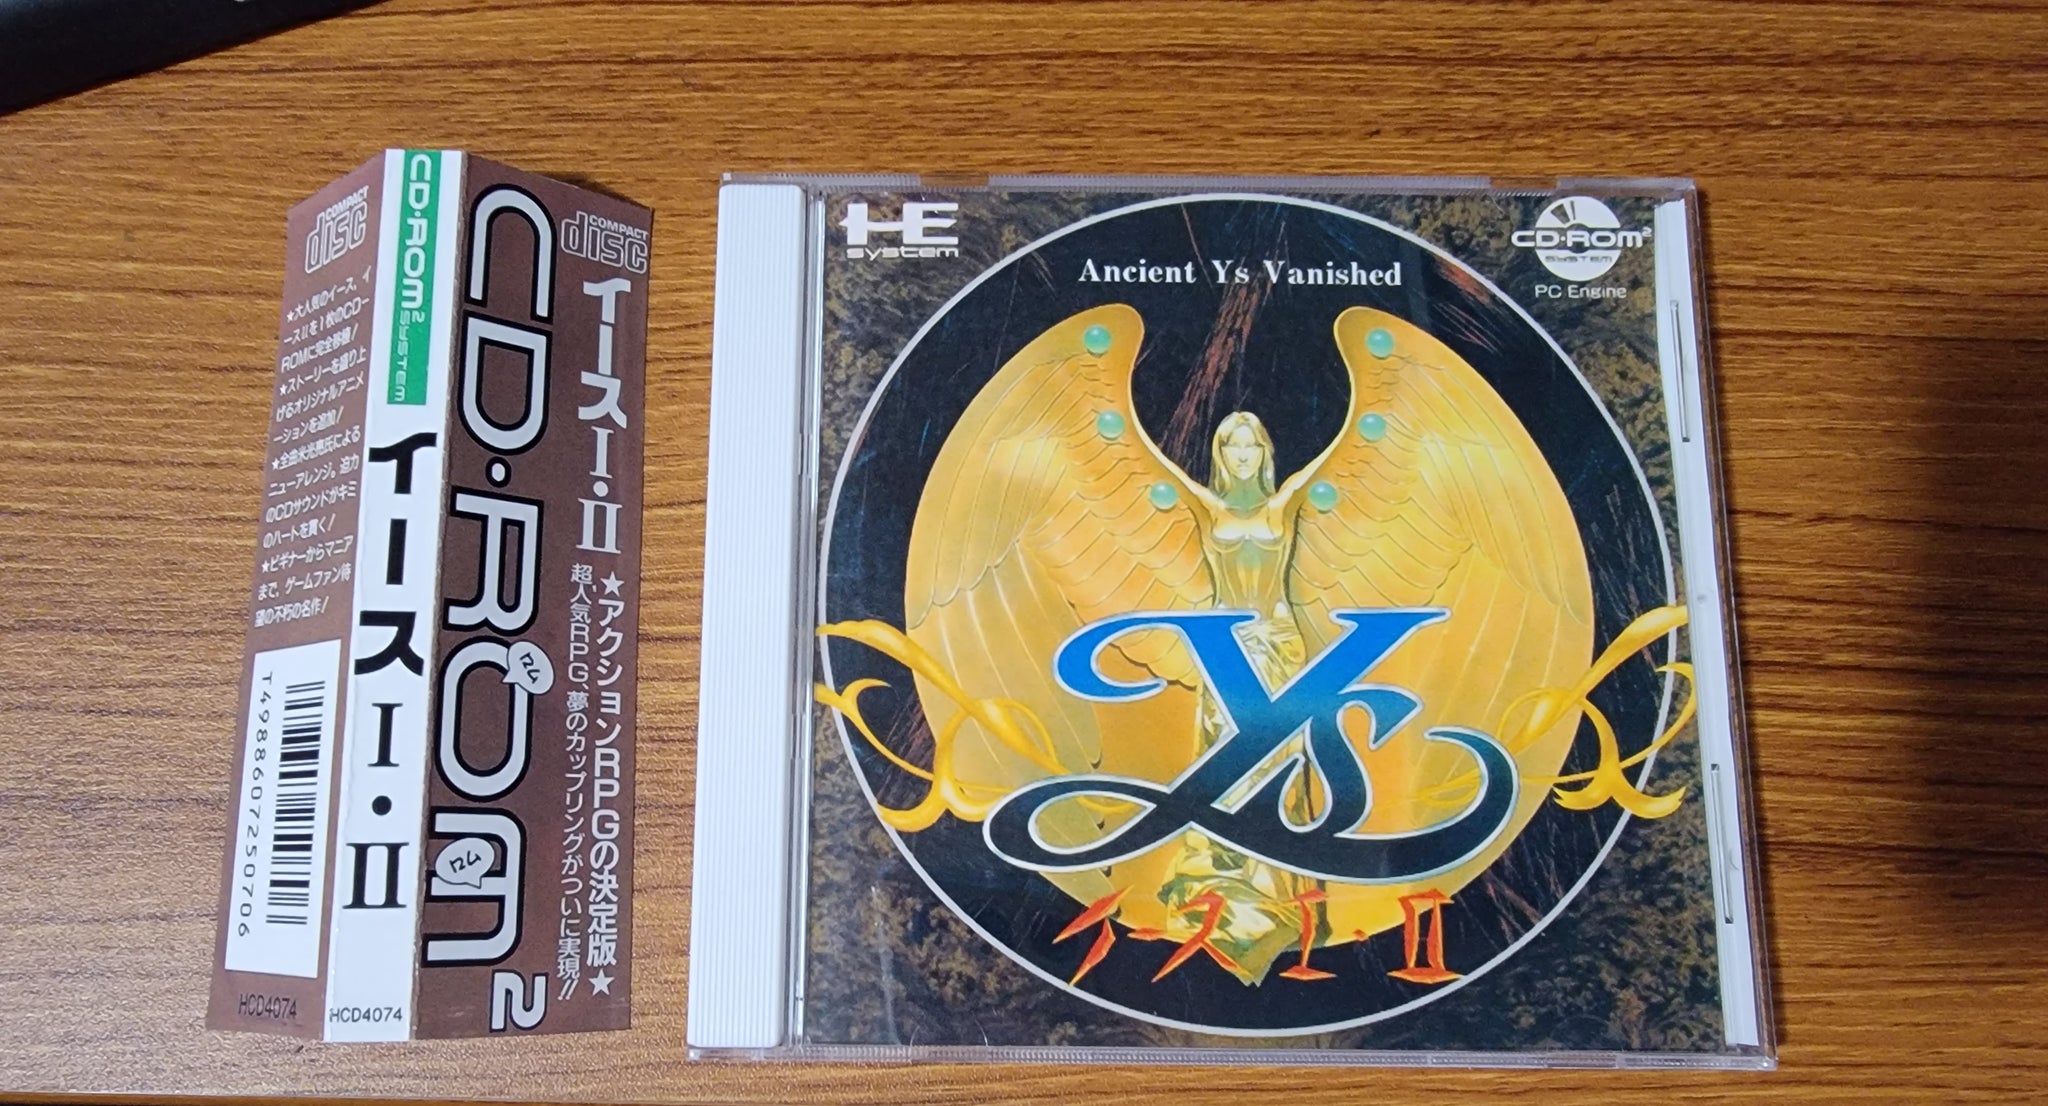 Ys I and II Turbografx CD reproduction game